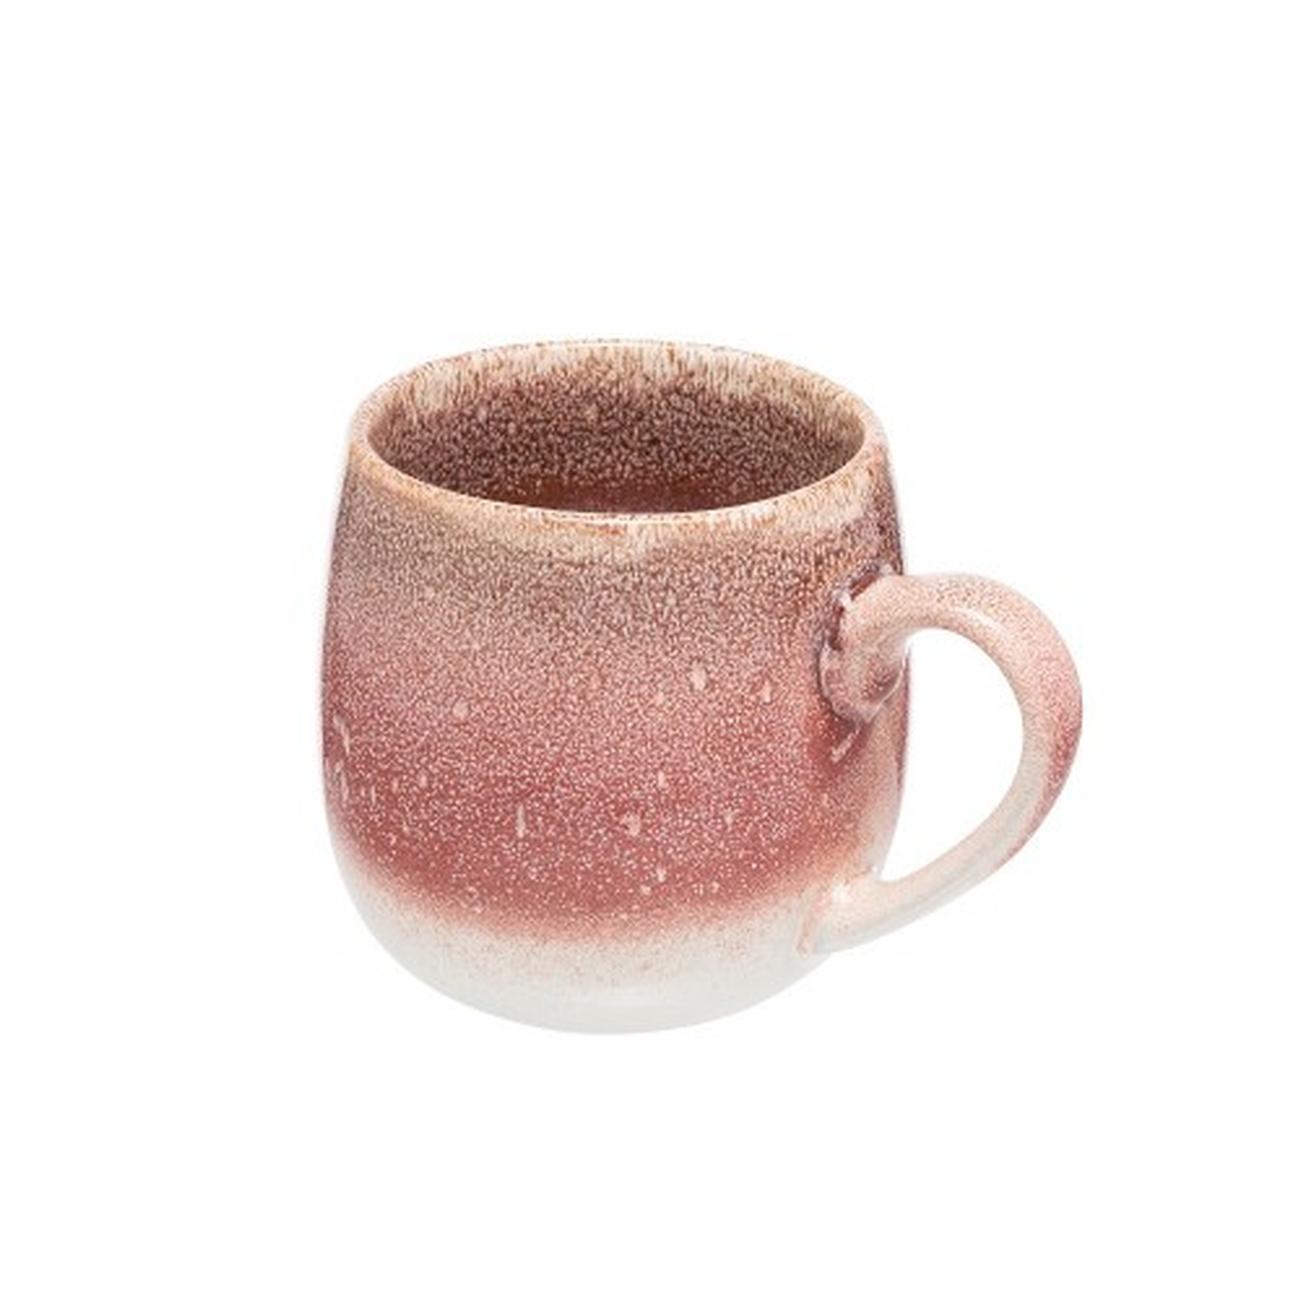 Siip-Reactive-Glaze-Ombre-Pink-Mug - Siip Reactive Glaze Ombre Pink Mug